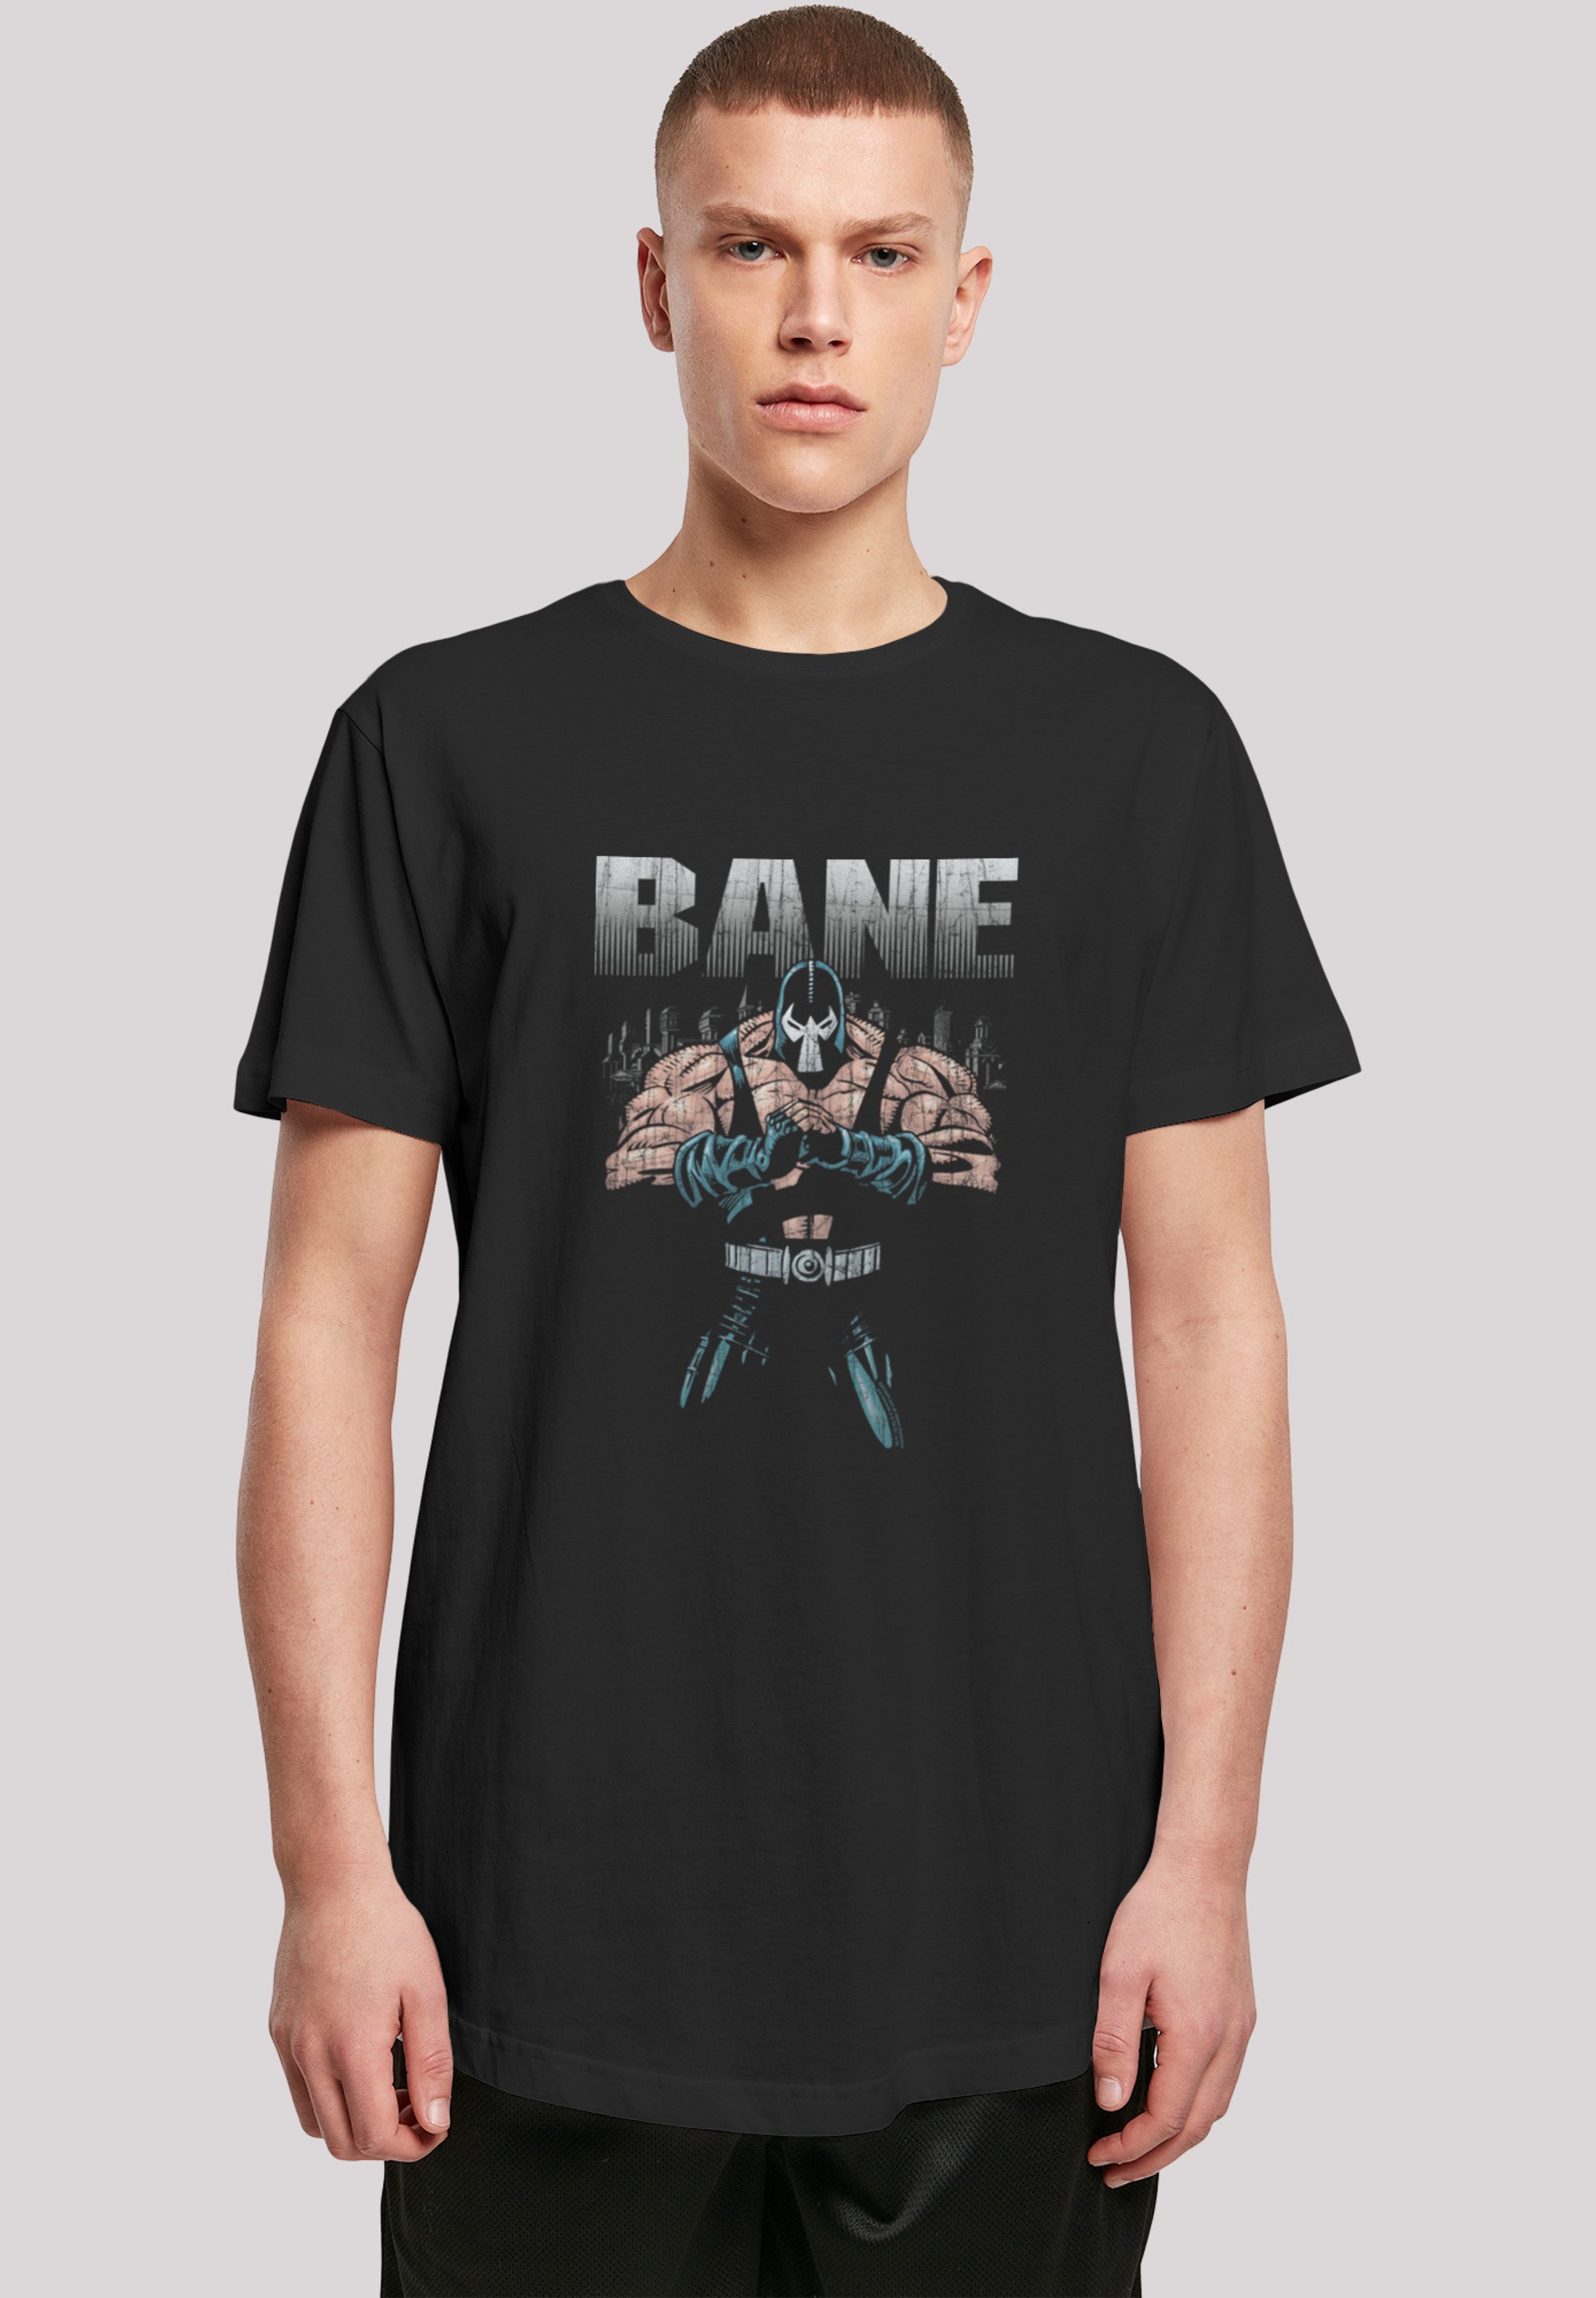 batman bane t shirt